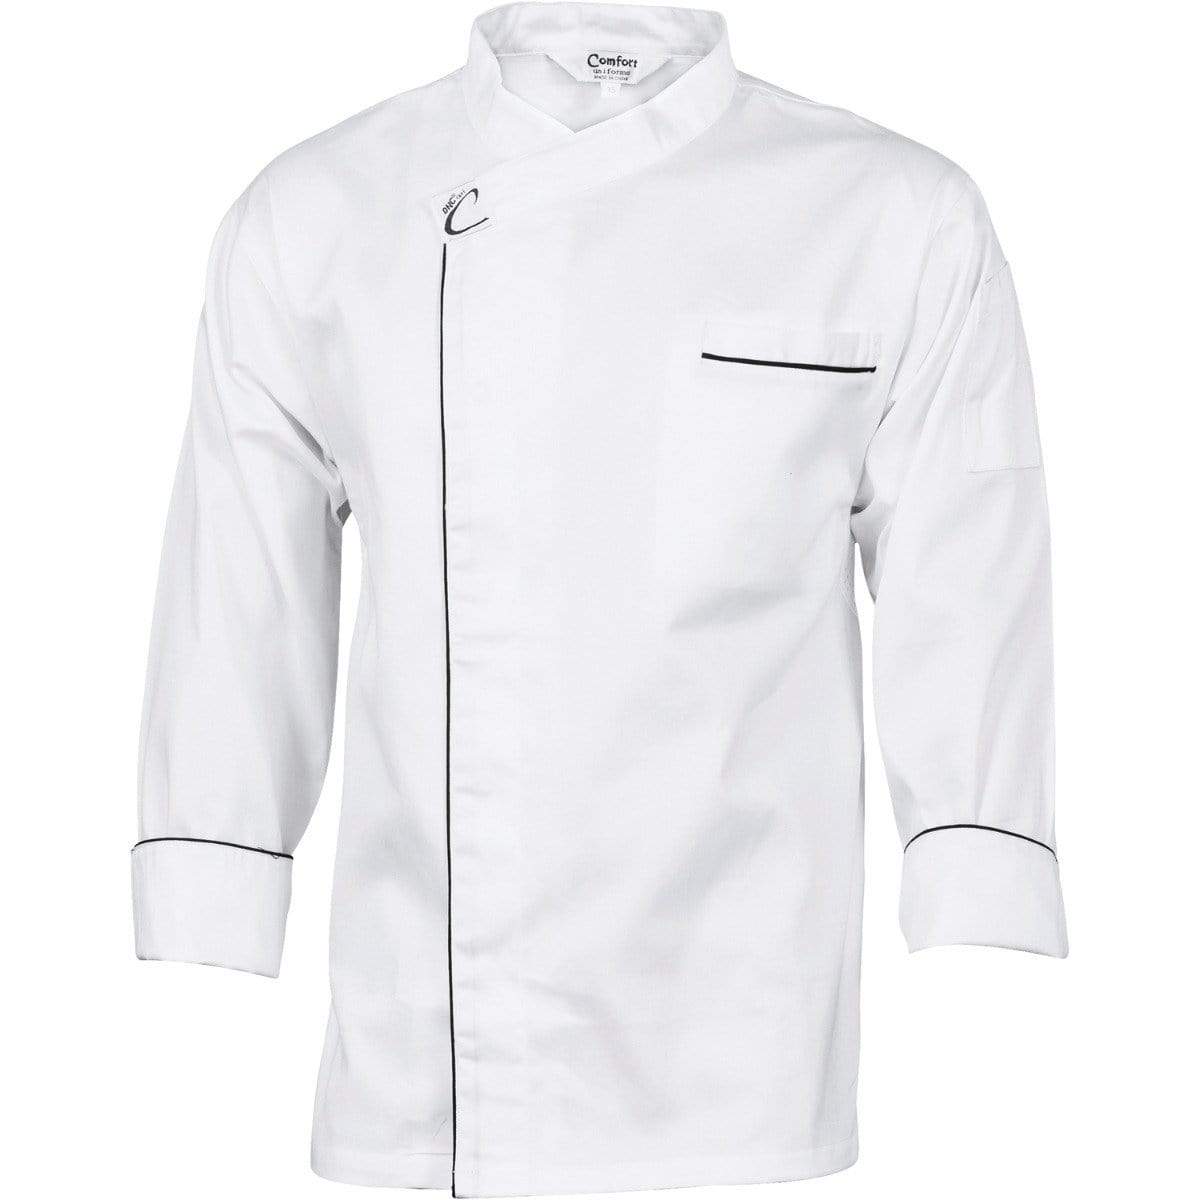 Dnc Workwear Cool-breeze Long Sleeve Modern JacketDnc Workwear Cool-breeze Long Sleeve Modern Jacket -1124 Hospitality & Chefwear DNC Workwear White 3XL 